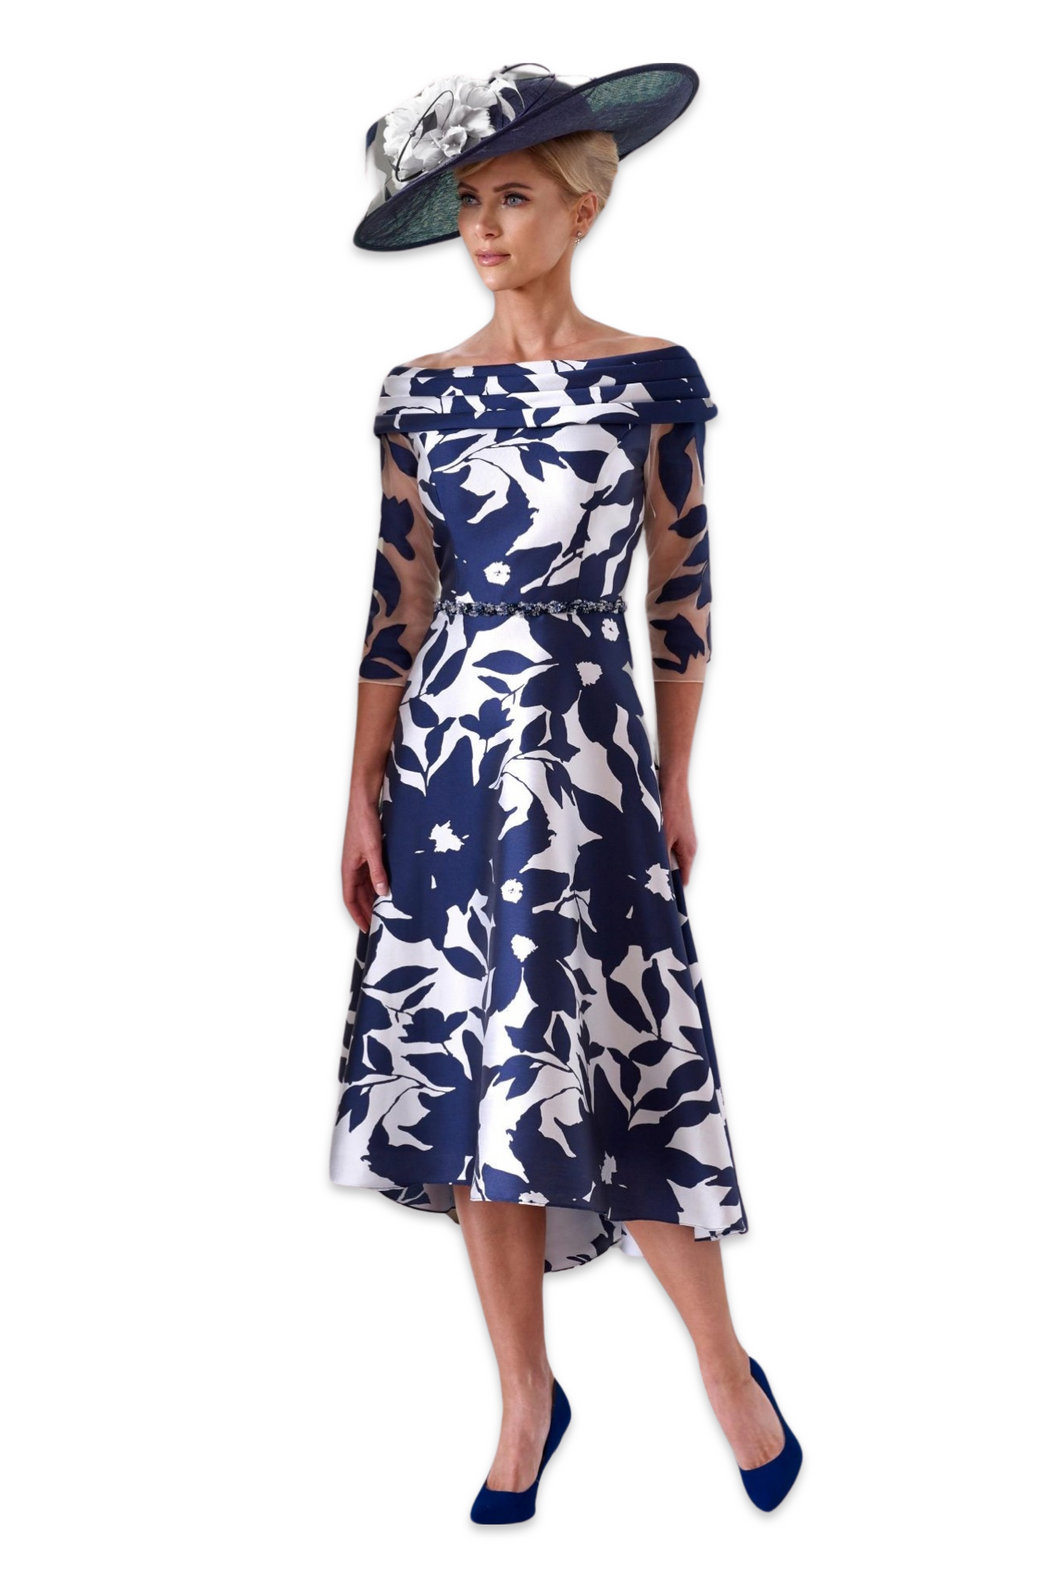 Irresistible Off The Shoulder Floral Detail Dress in Navy & Silver UK10